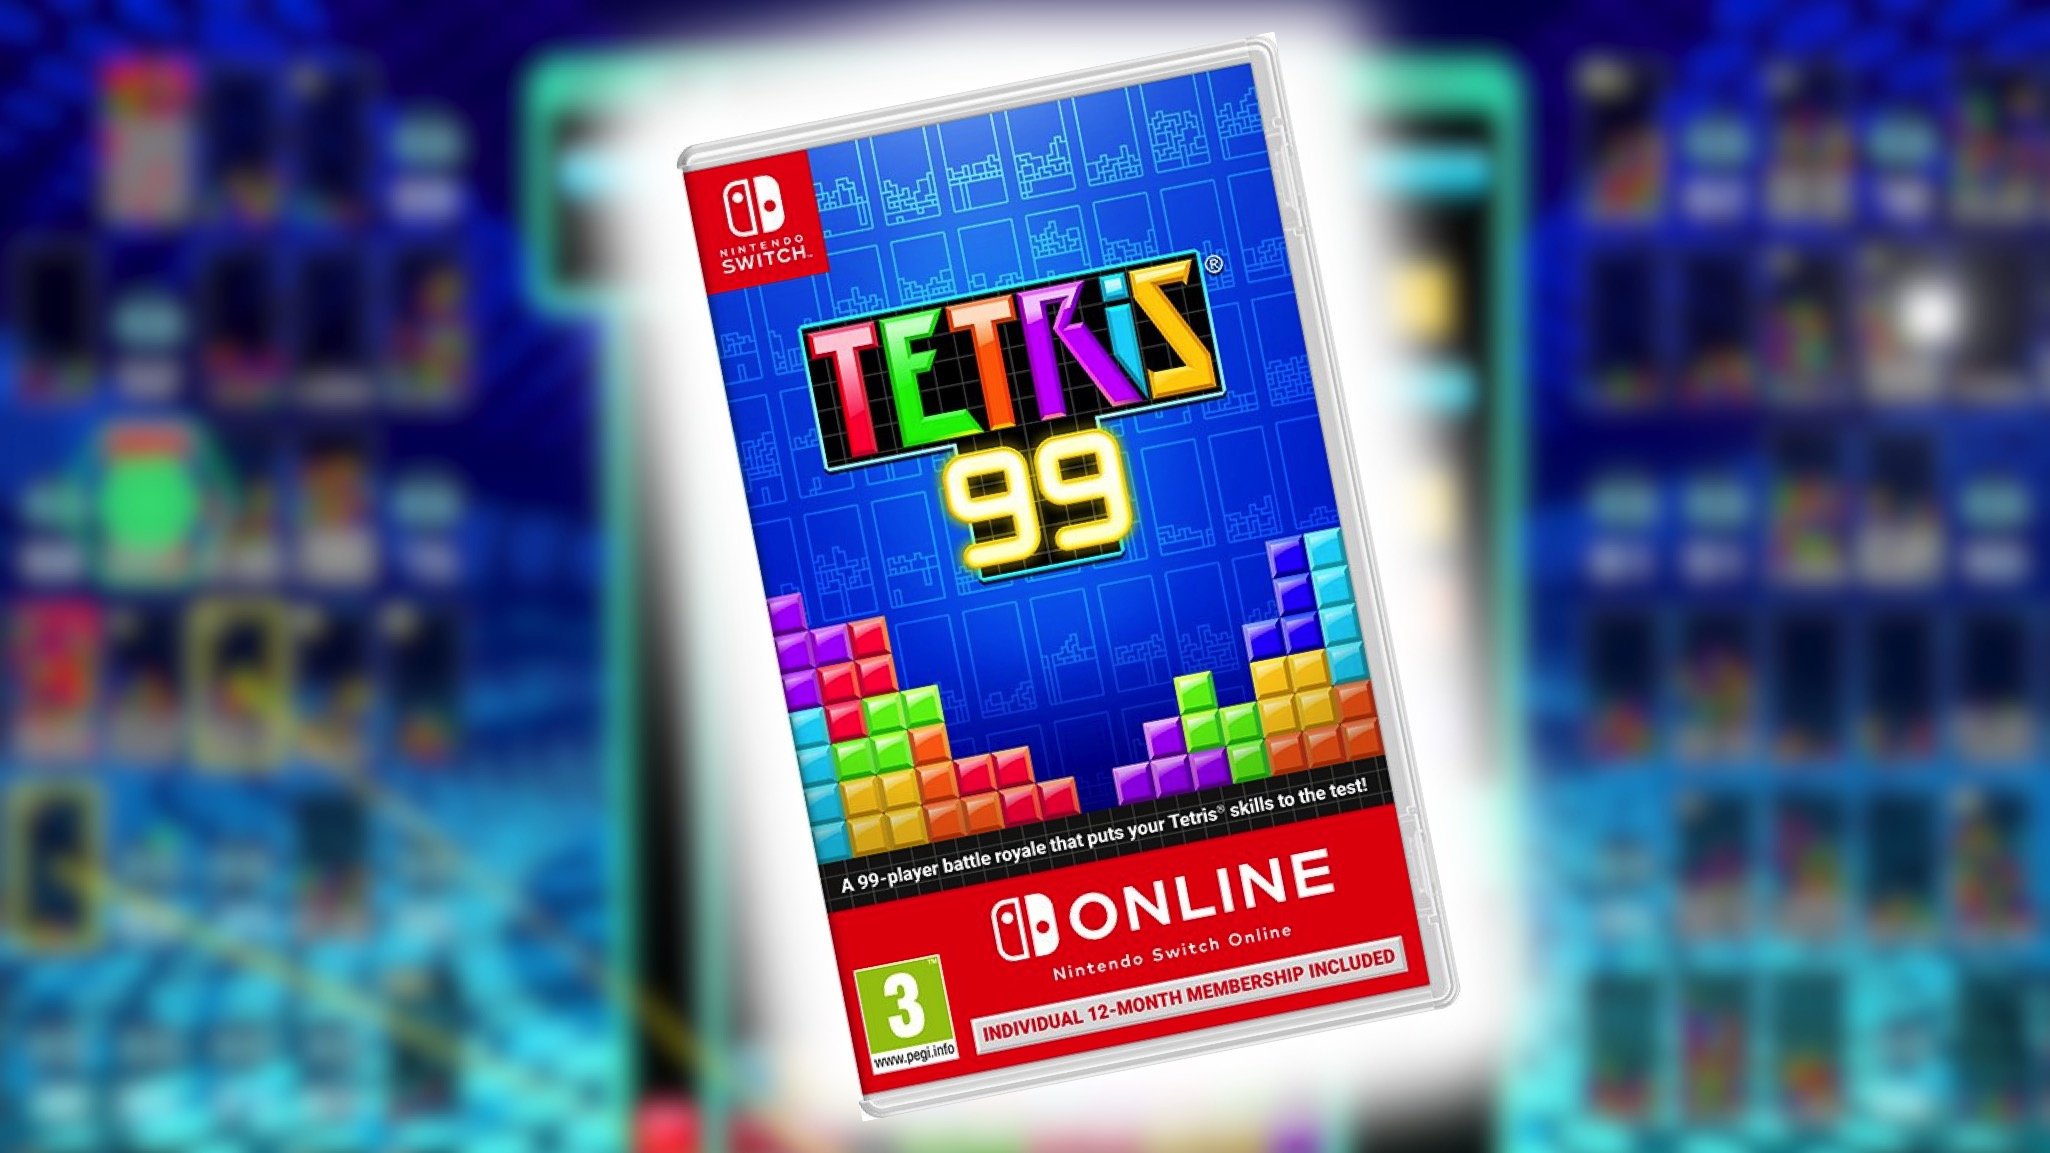 tetris 99 switch 2 player